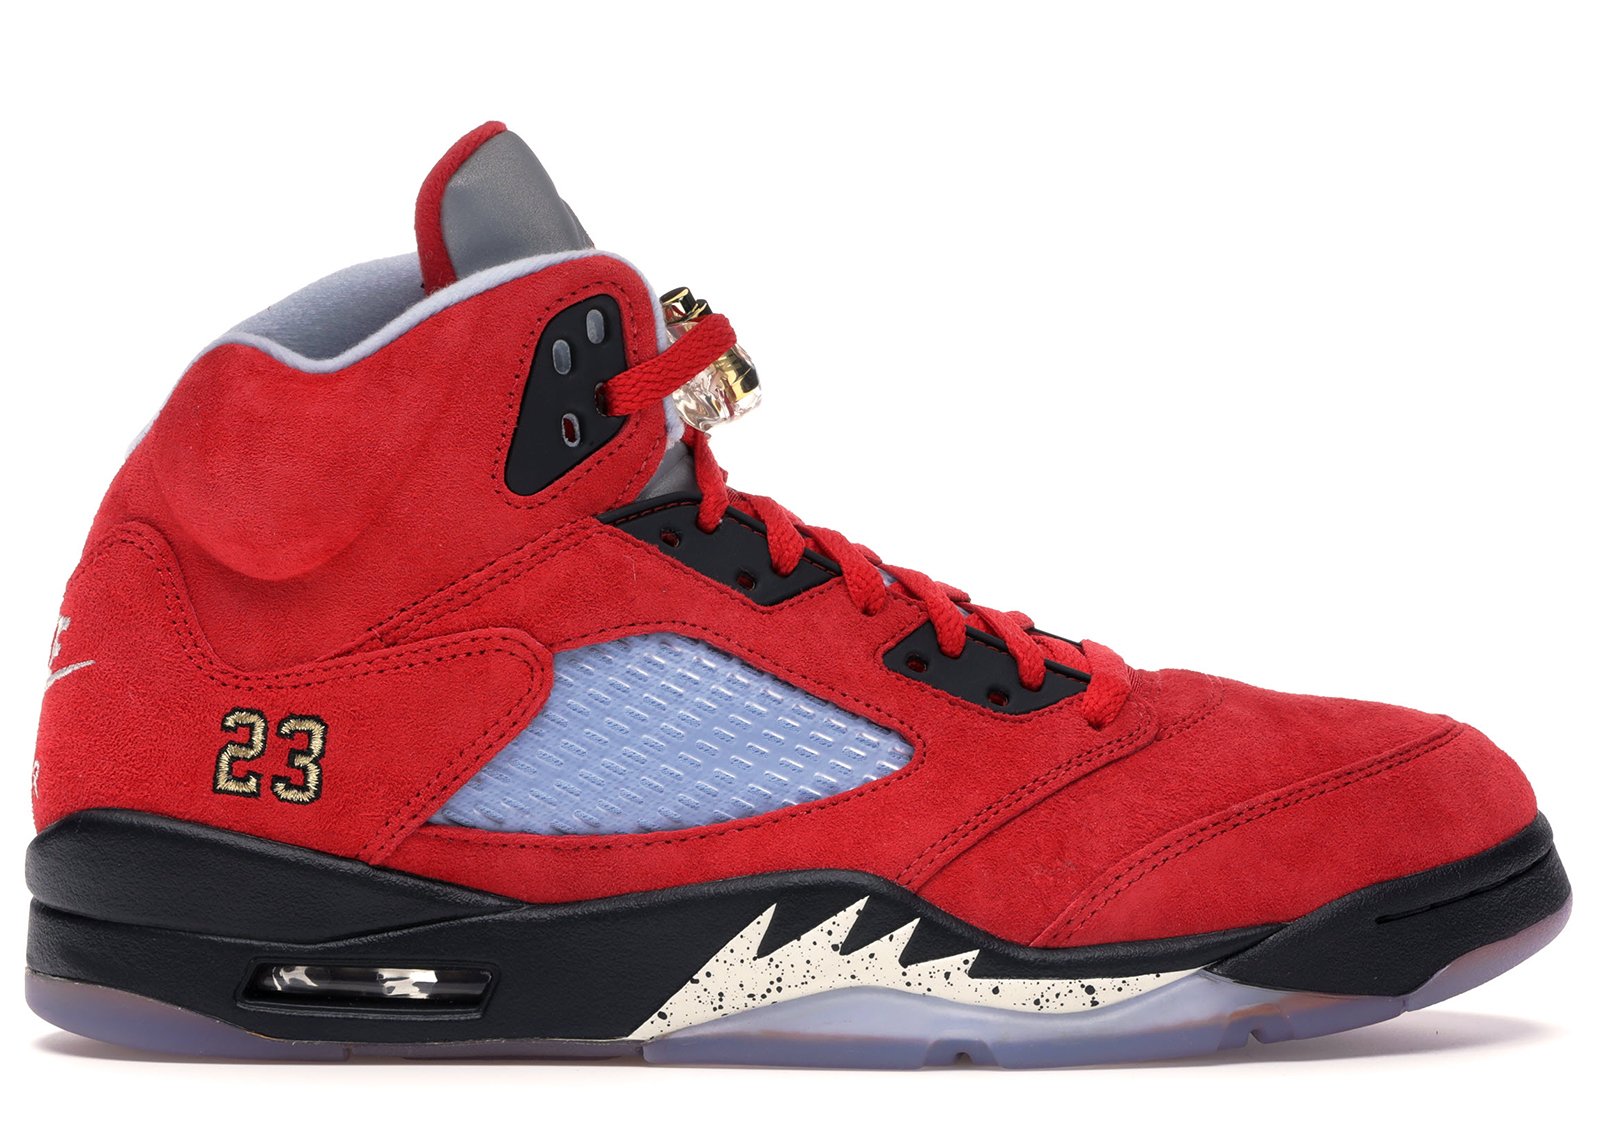 Jordan 5 Retro Trophy Room University Red (F&F) sneakers